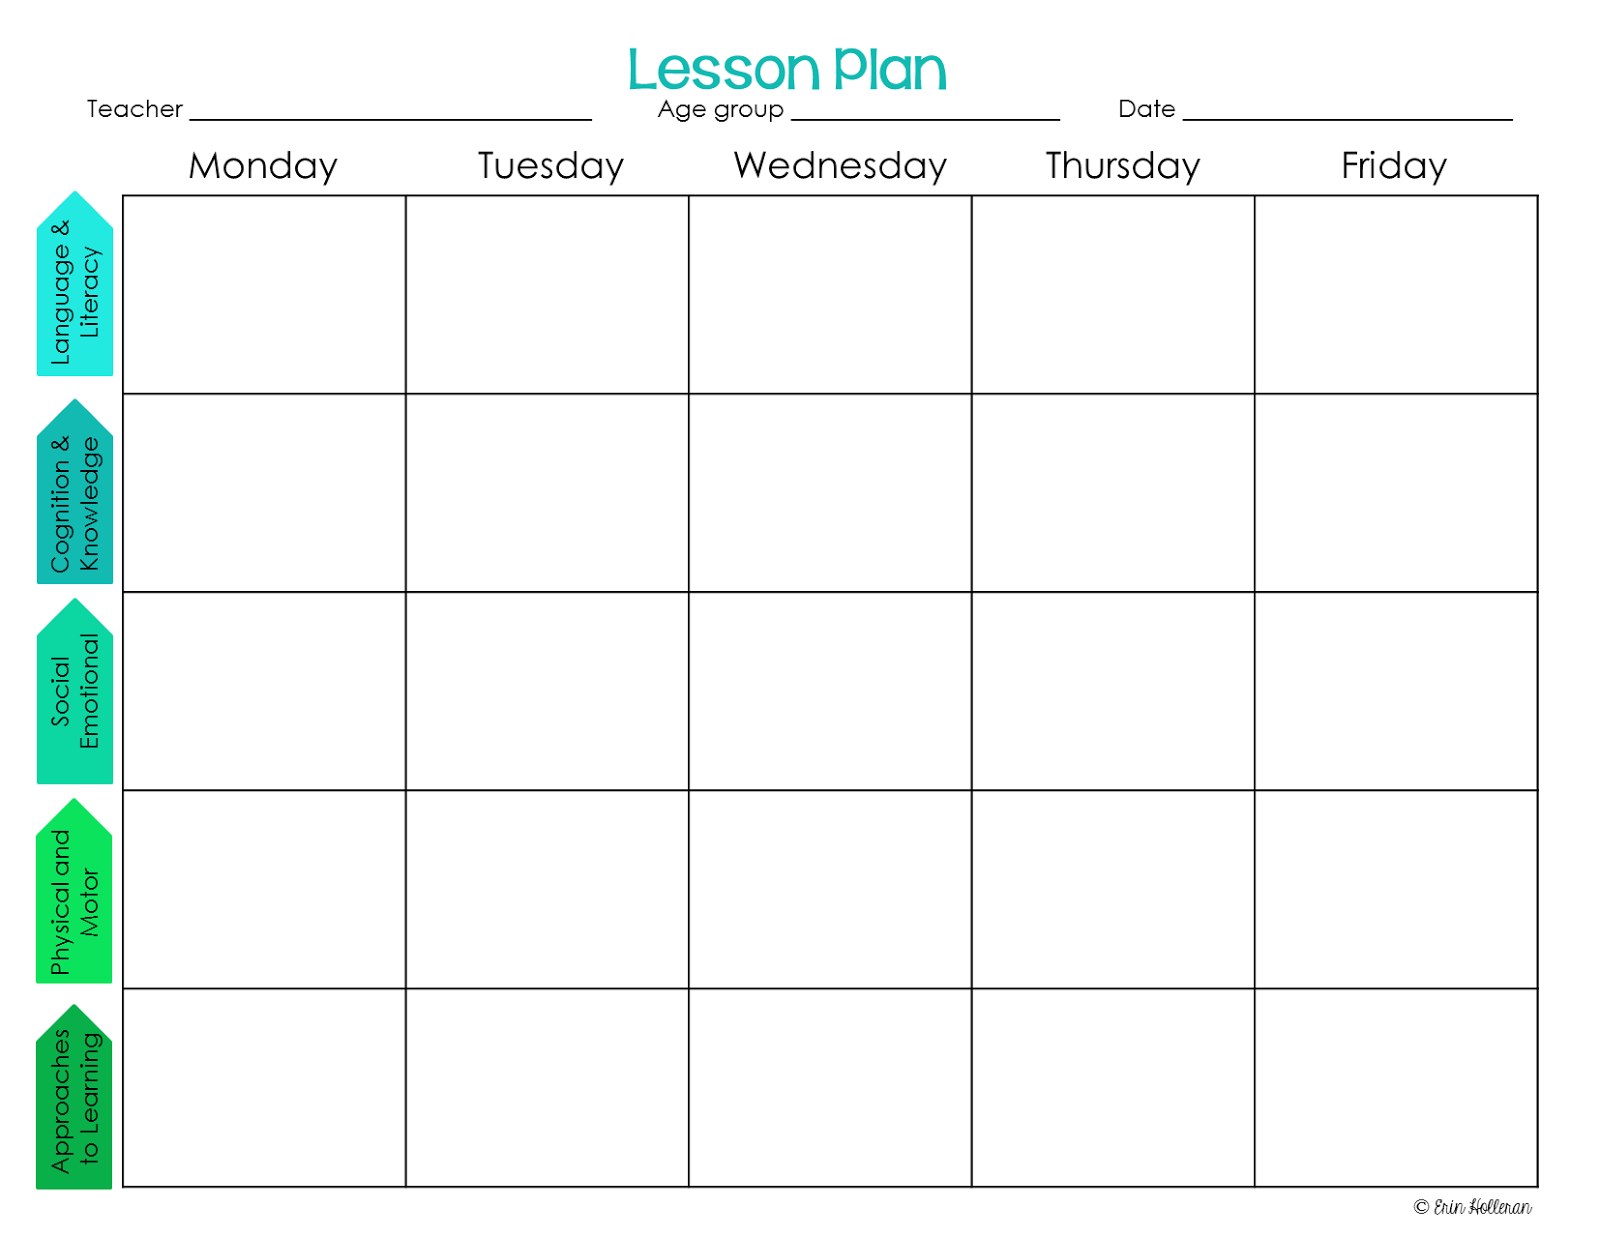 Blank Lesson Plan Template For Pre-K from 4.bp.blogspot.com